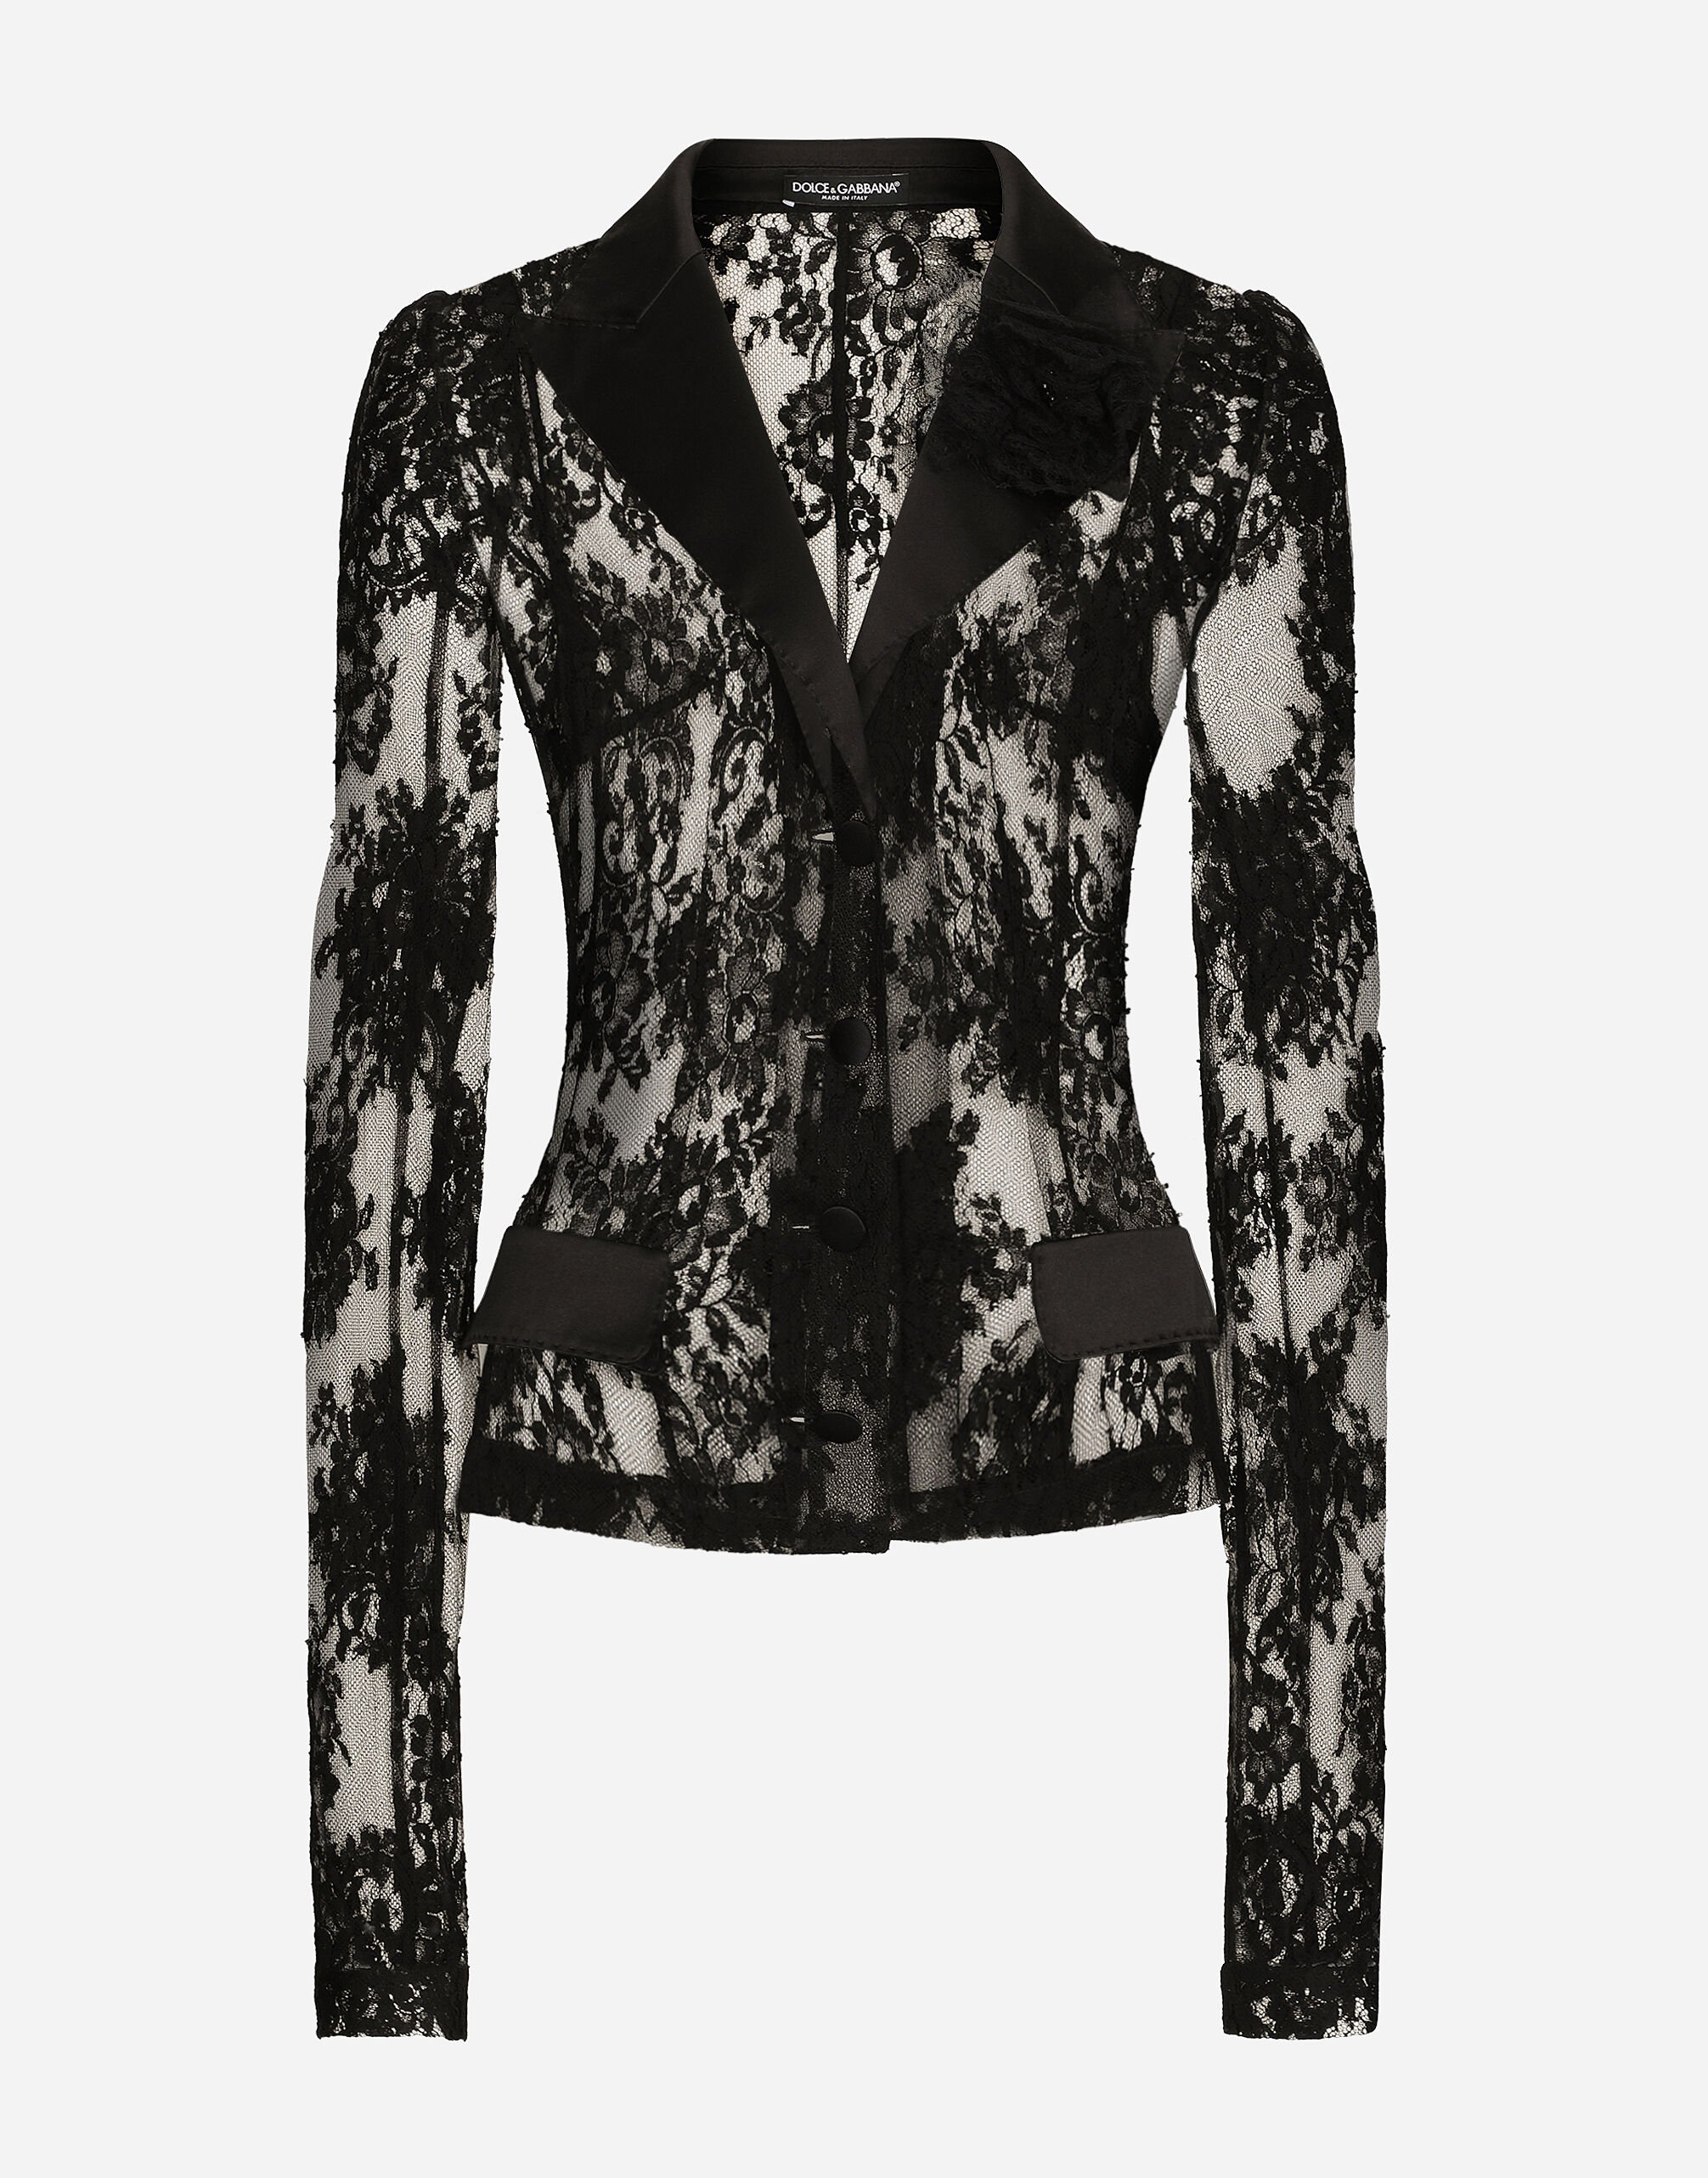 Dolce & Gabbana Floral lace jacket with satin details Print FN093RGDAWW